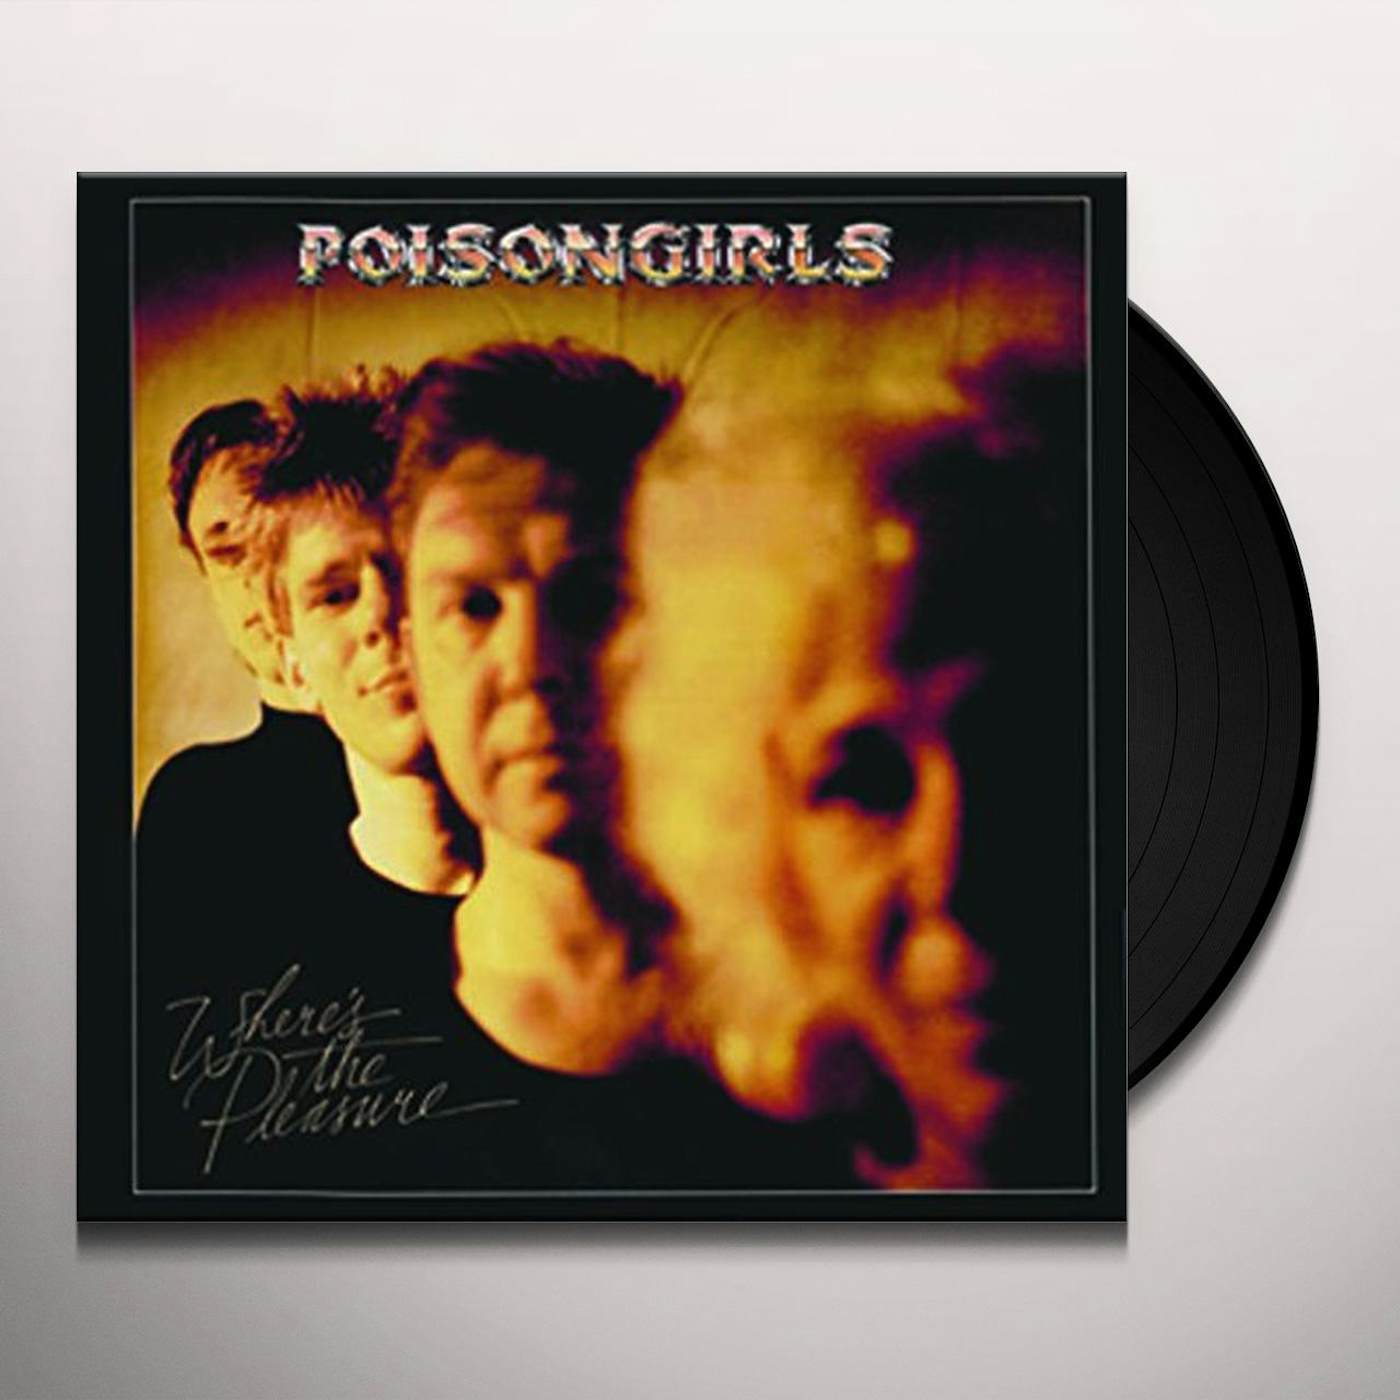 Poison Girls Where's The Pleasure Vinyl Record